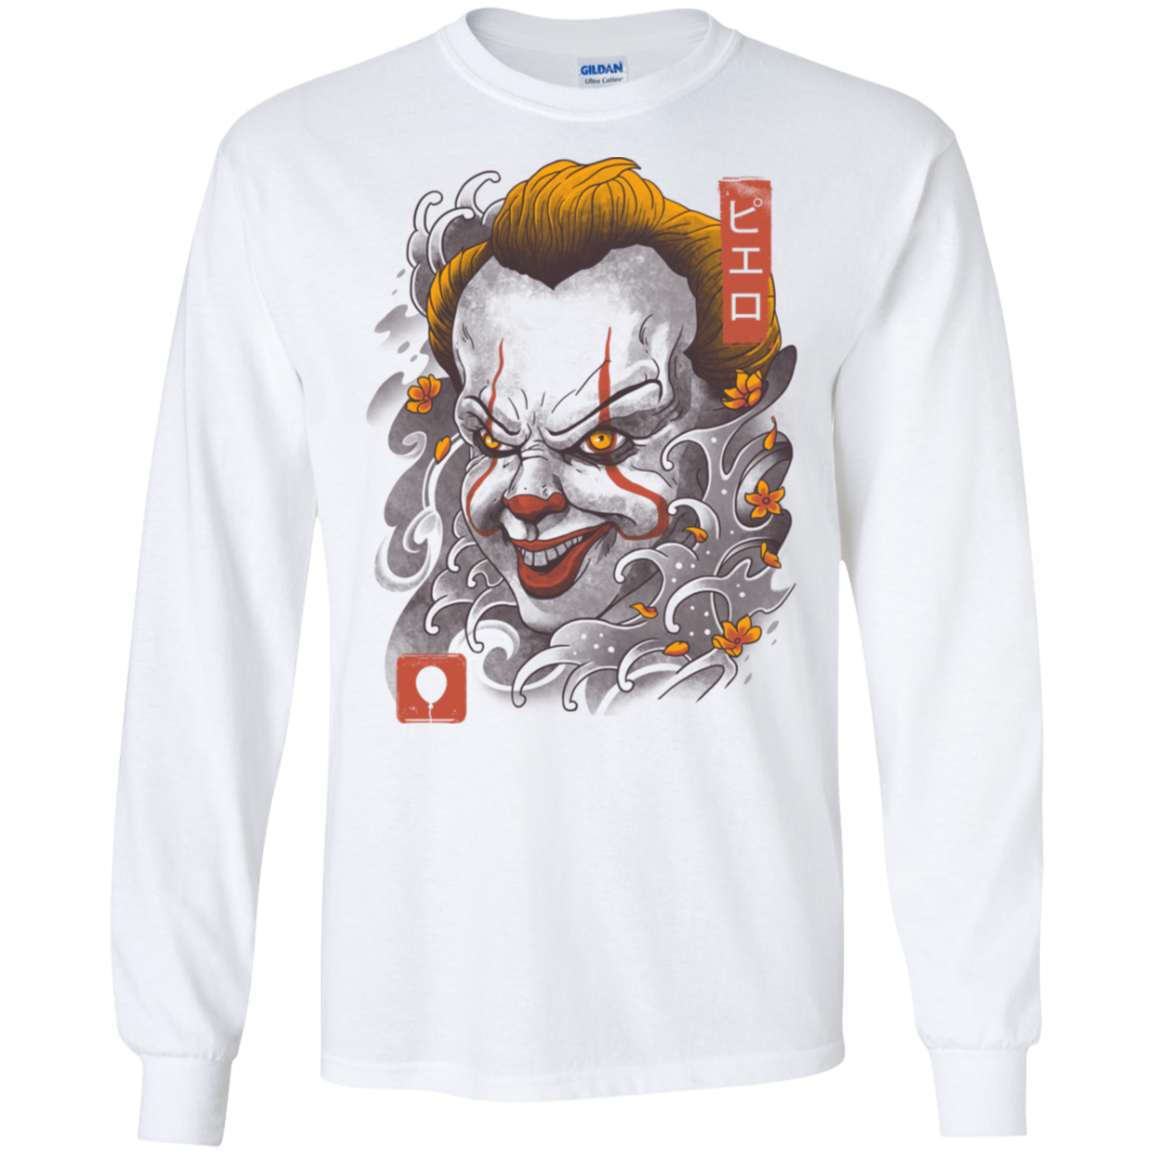 Oni Clown Mask Men's Long Sleeve T-Shirt